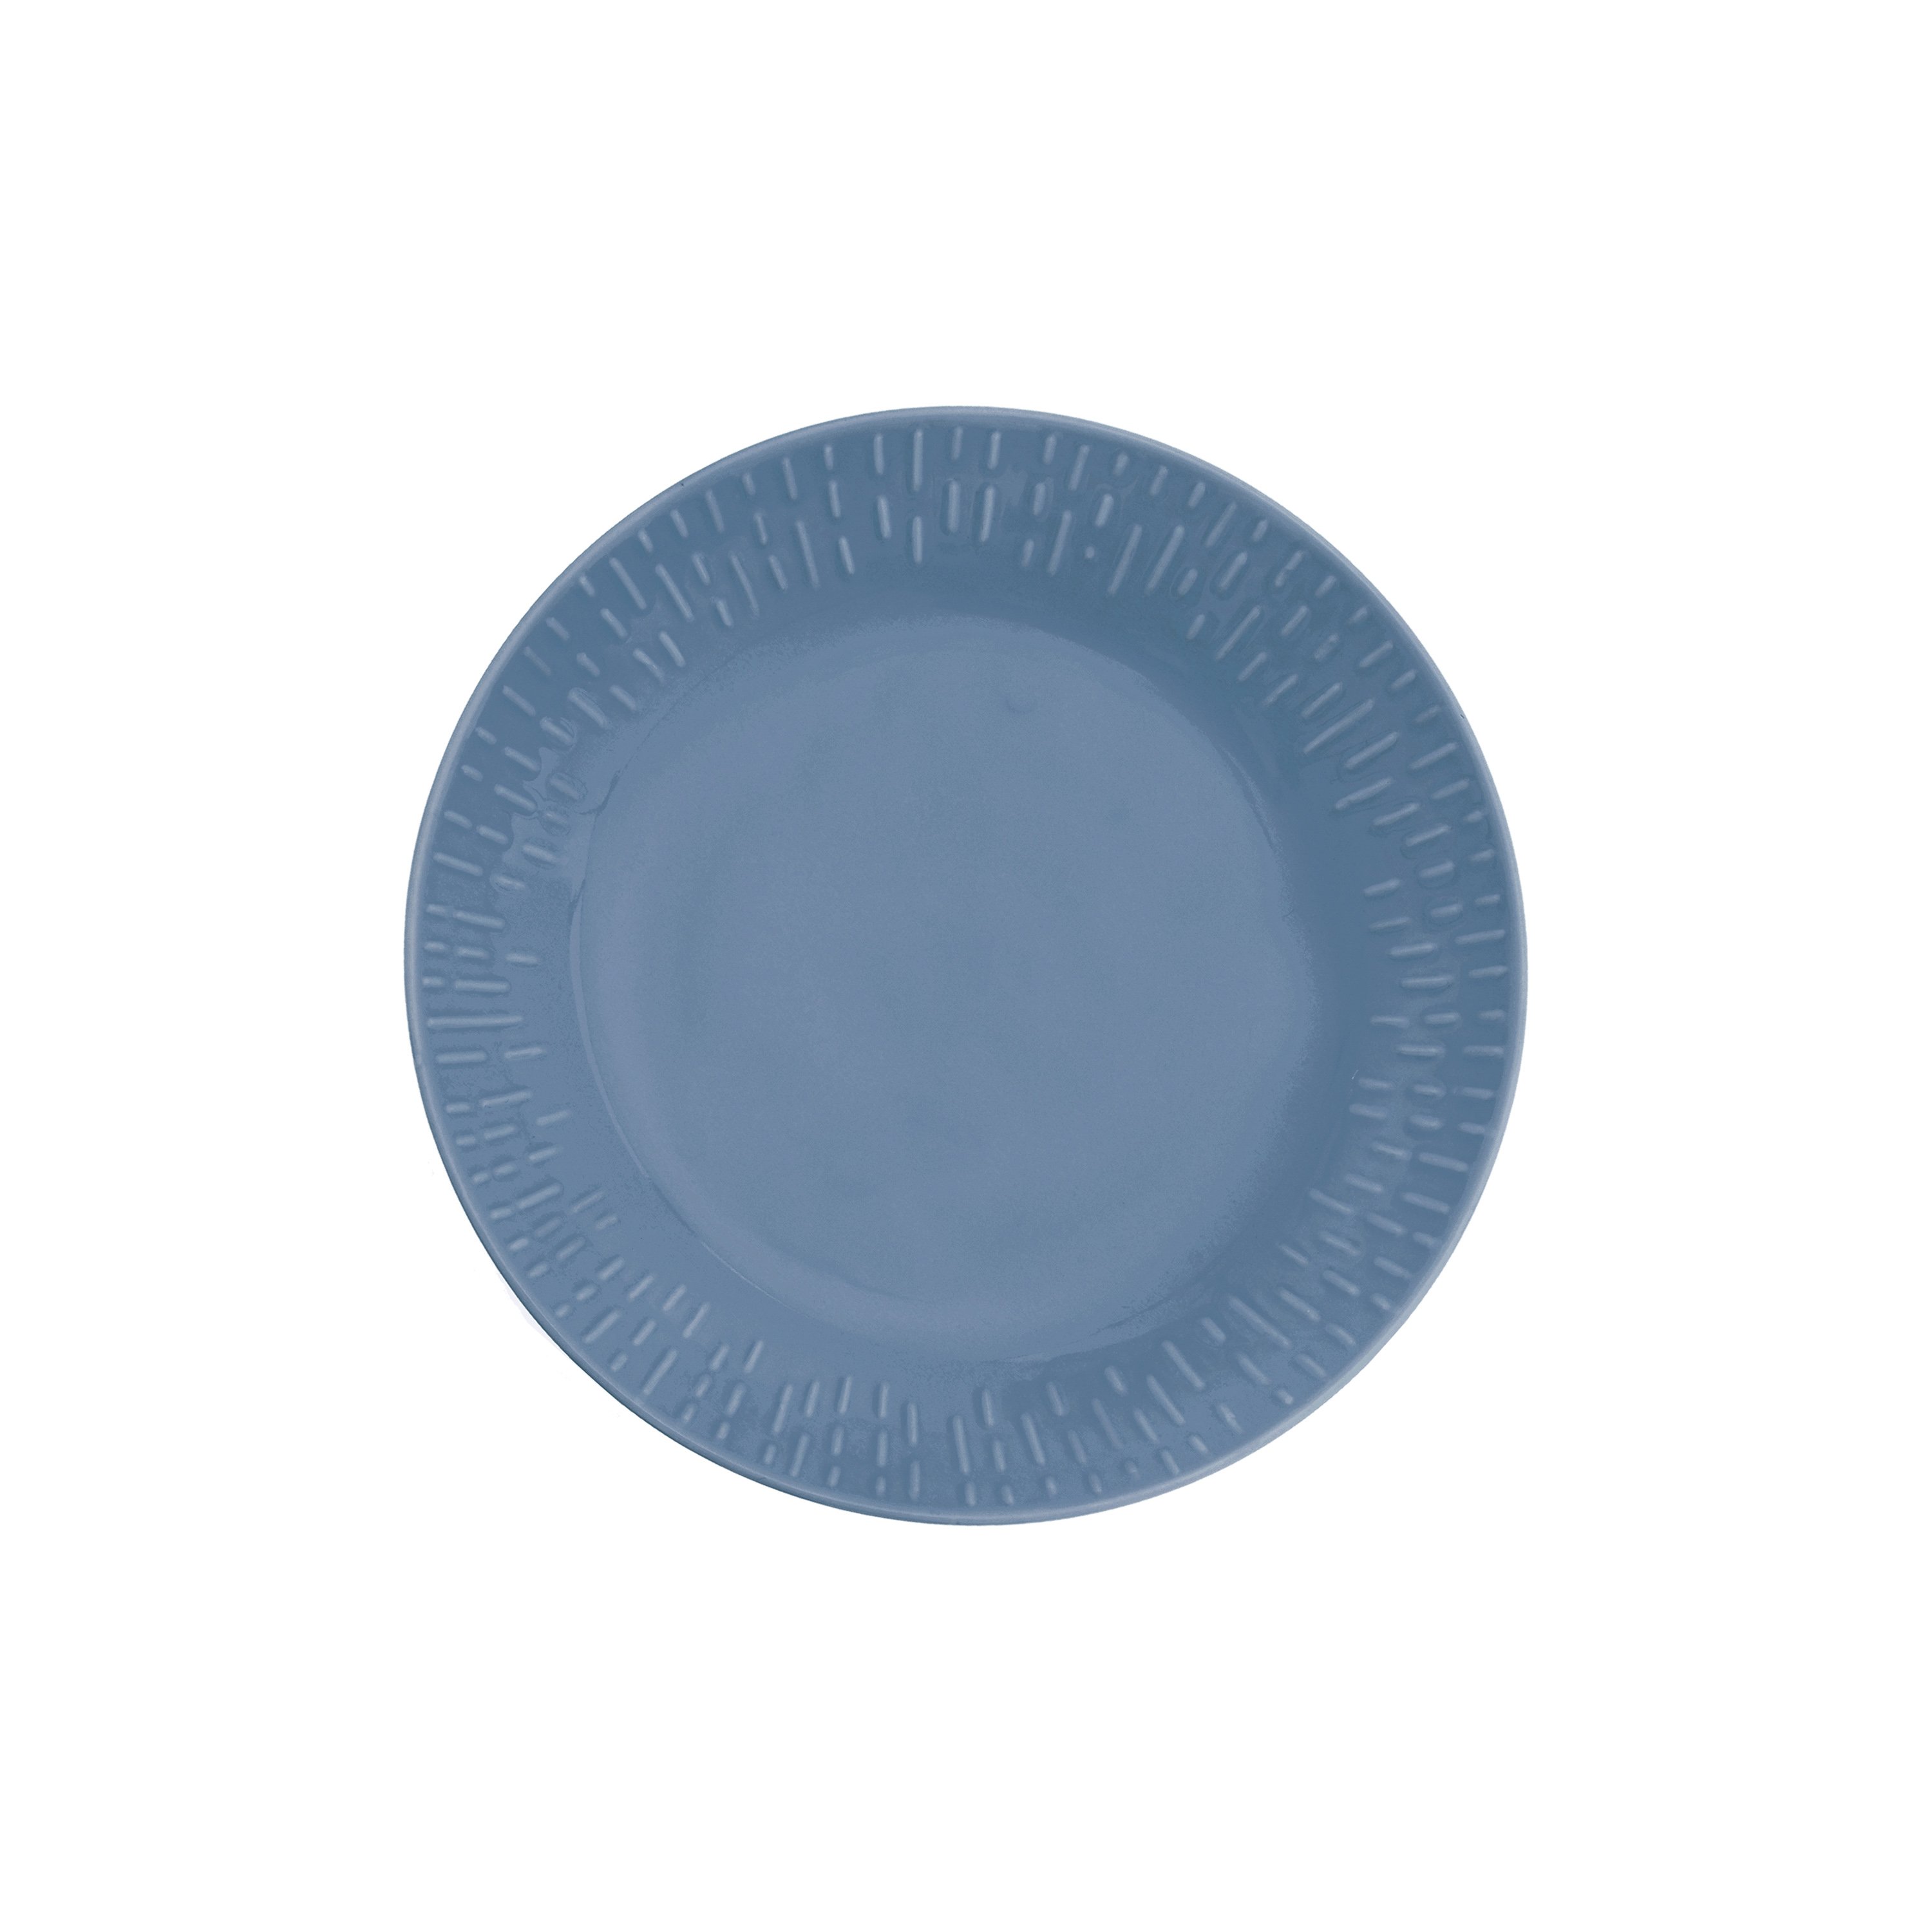 Aida - Life in Colour - Confetti - Blueberry pasta plate w/relief porcelain (13424)